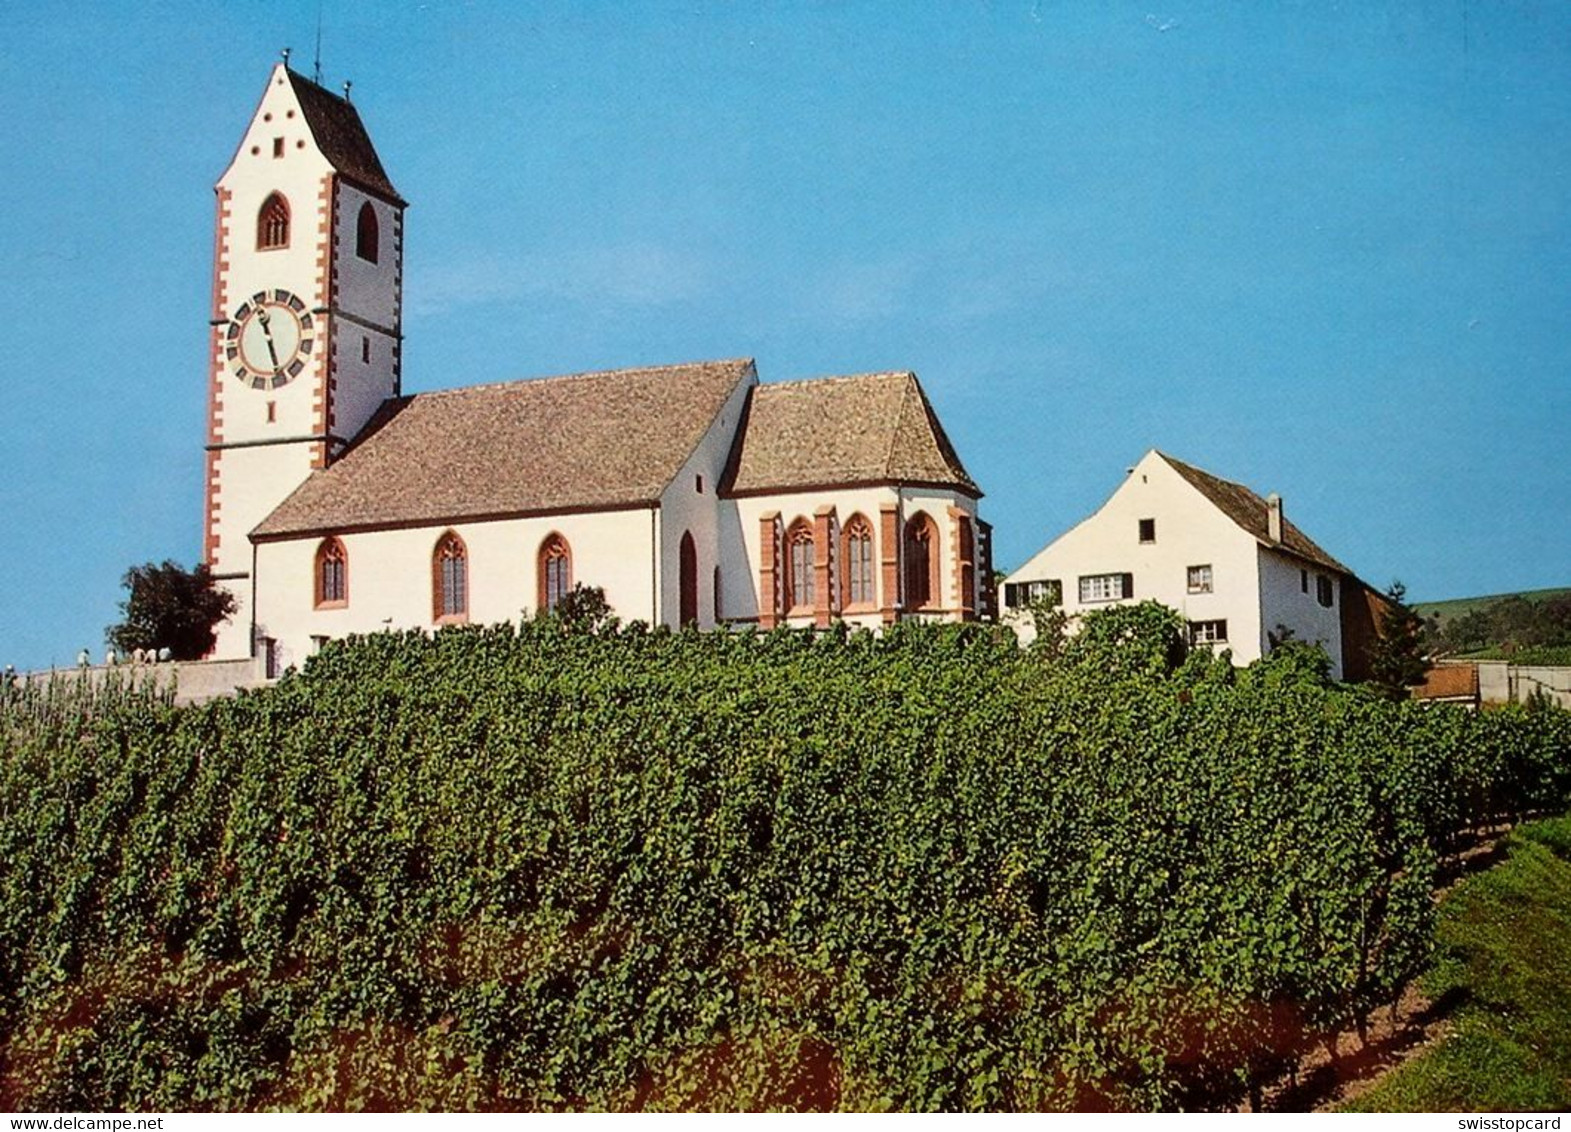 HALLAU Bergkirche St. Moritz - Hallau